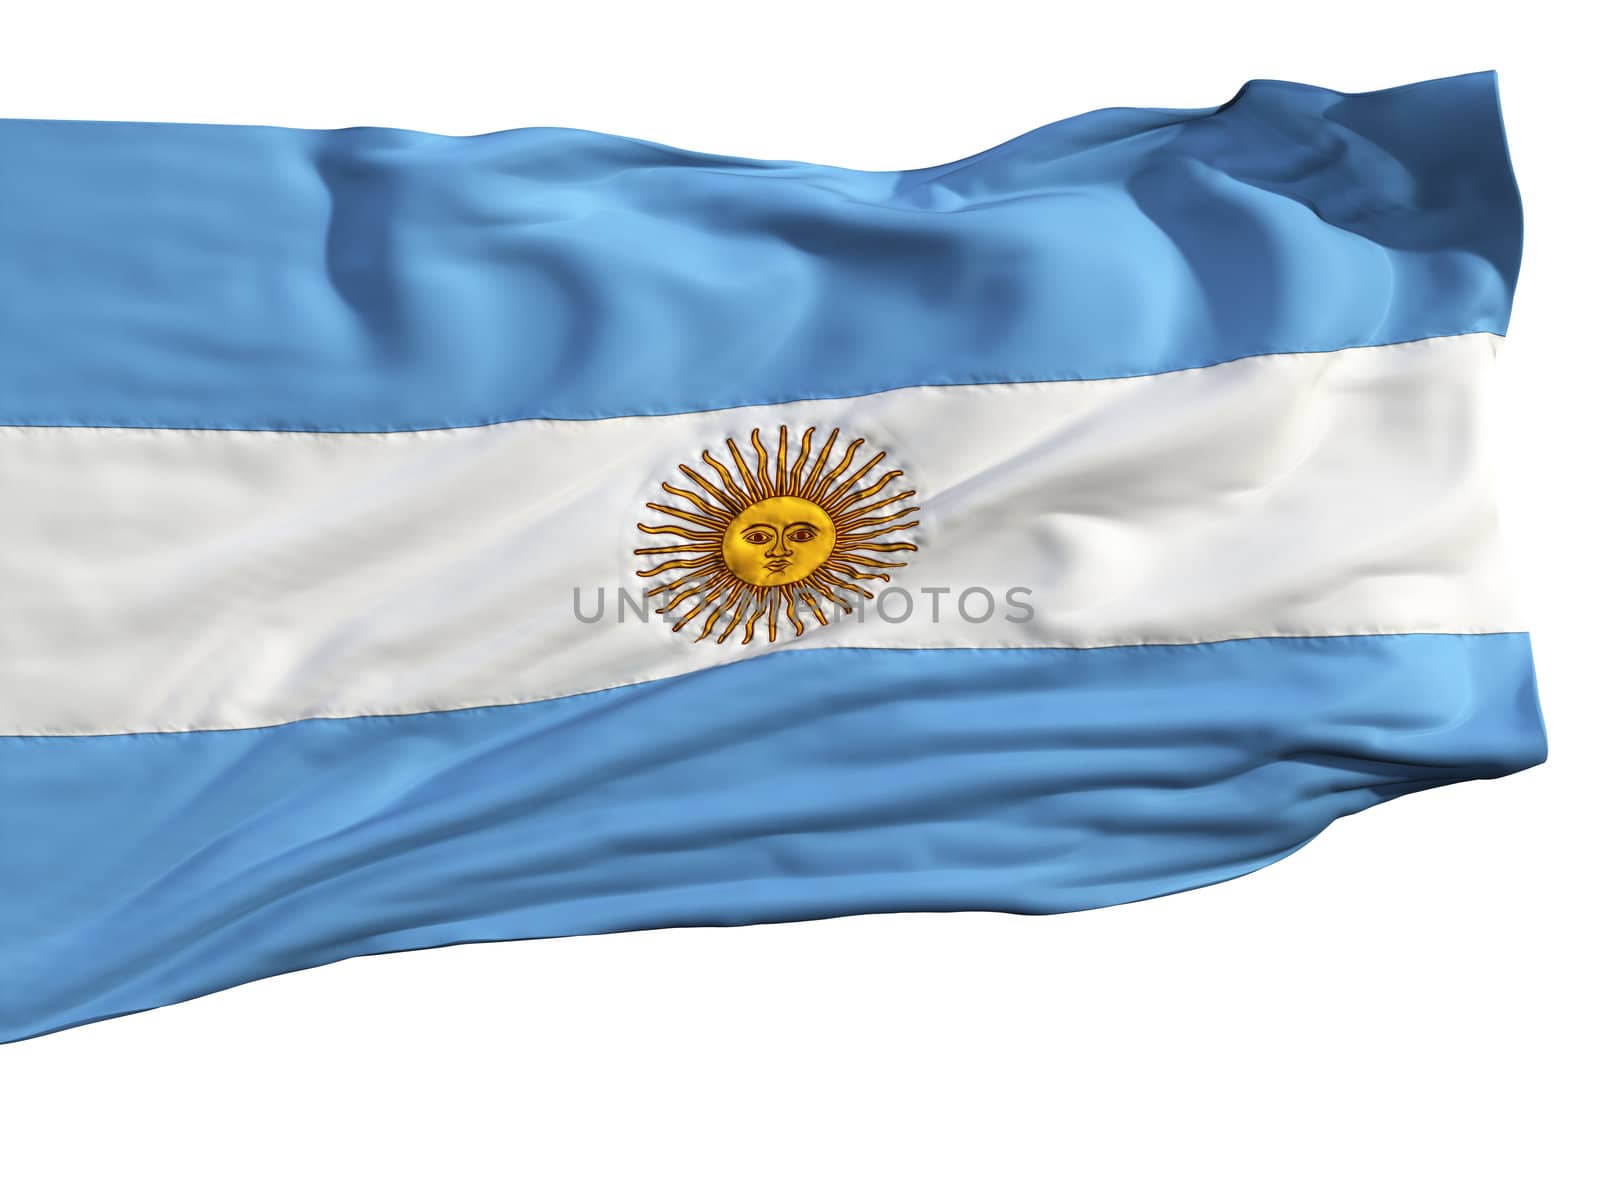 Flag of Argentina, fluttering in the wind by Antartis